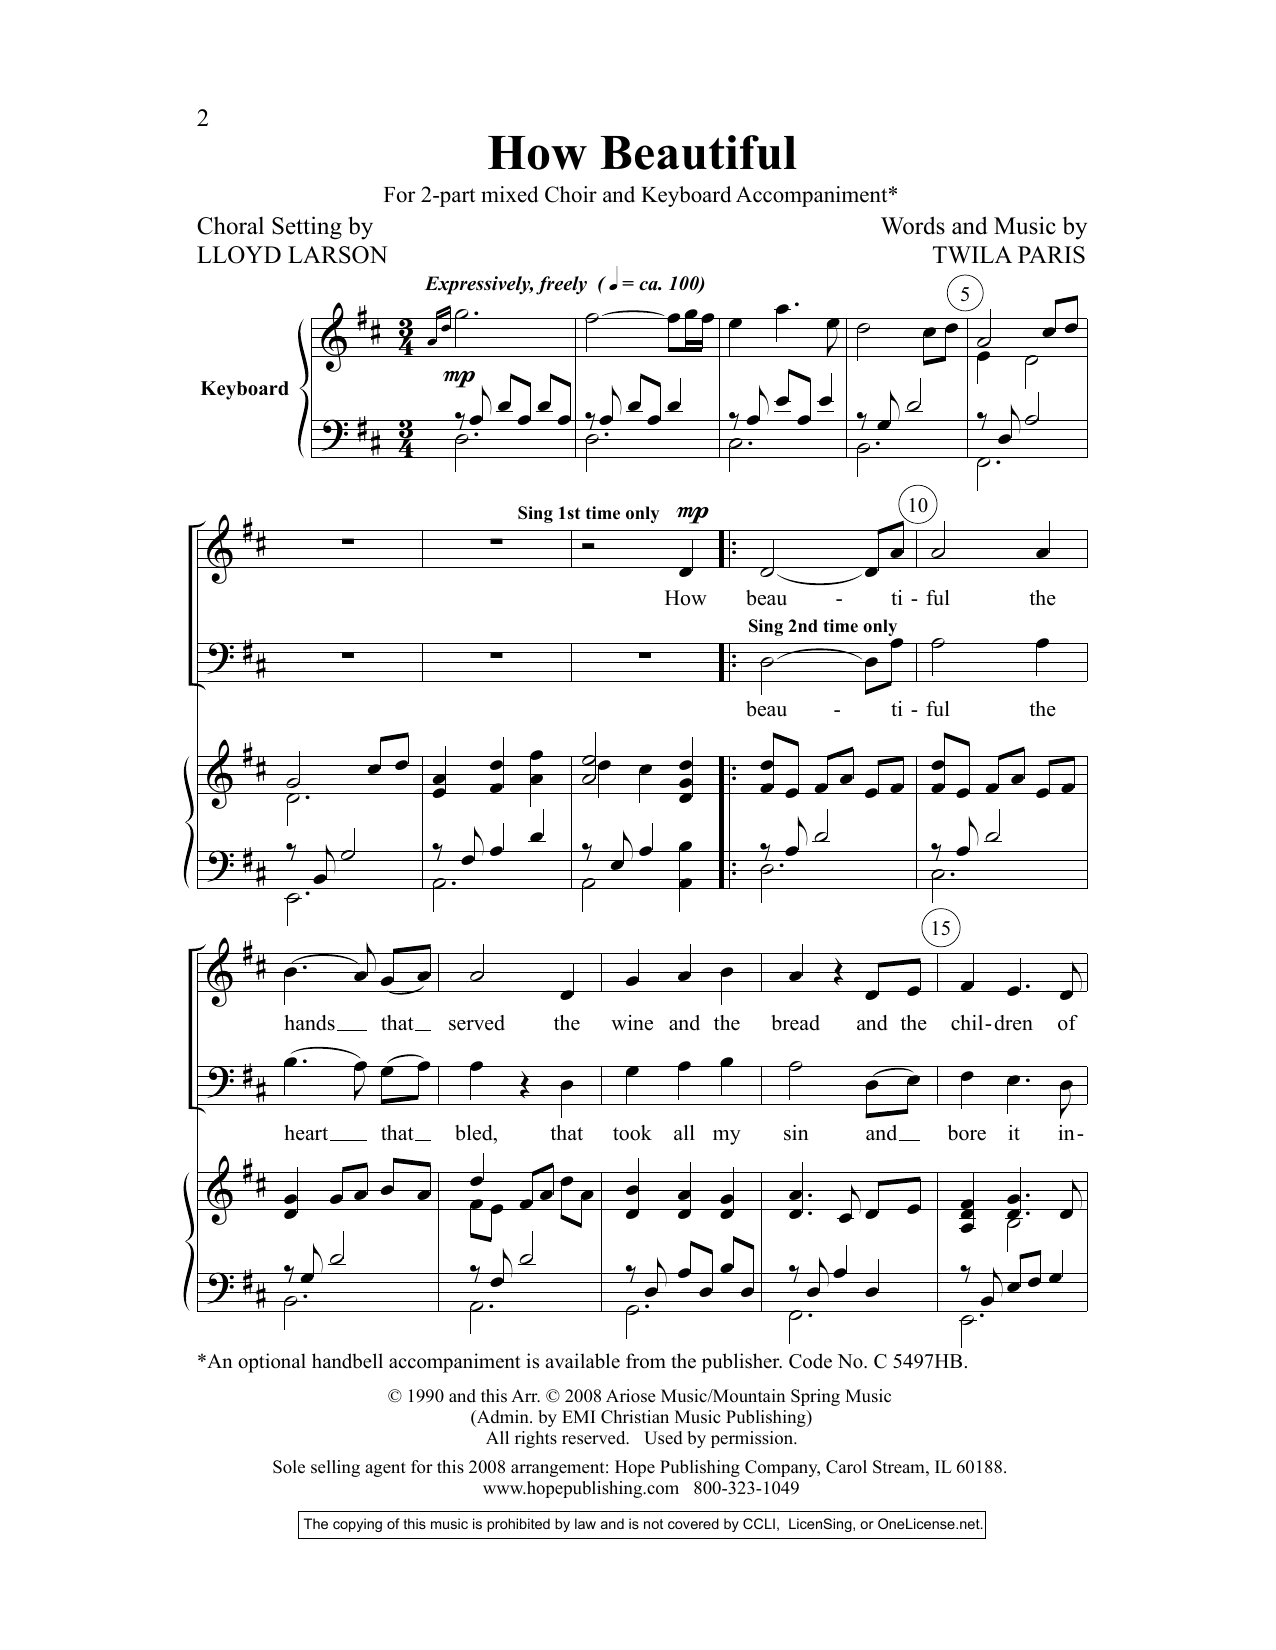 Lloyd Larson How Beautiful sheet music notes and chords arranged for SATB Choir